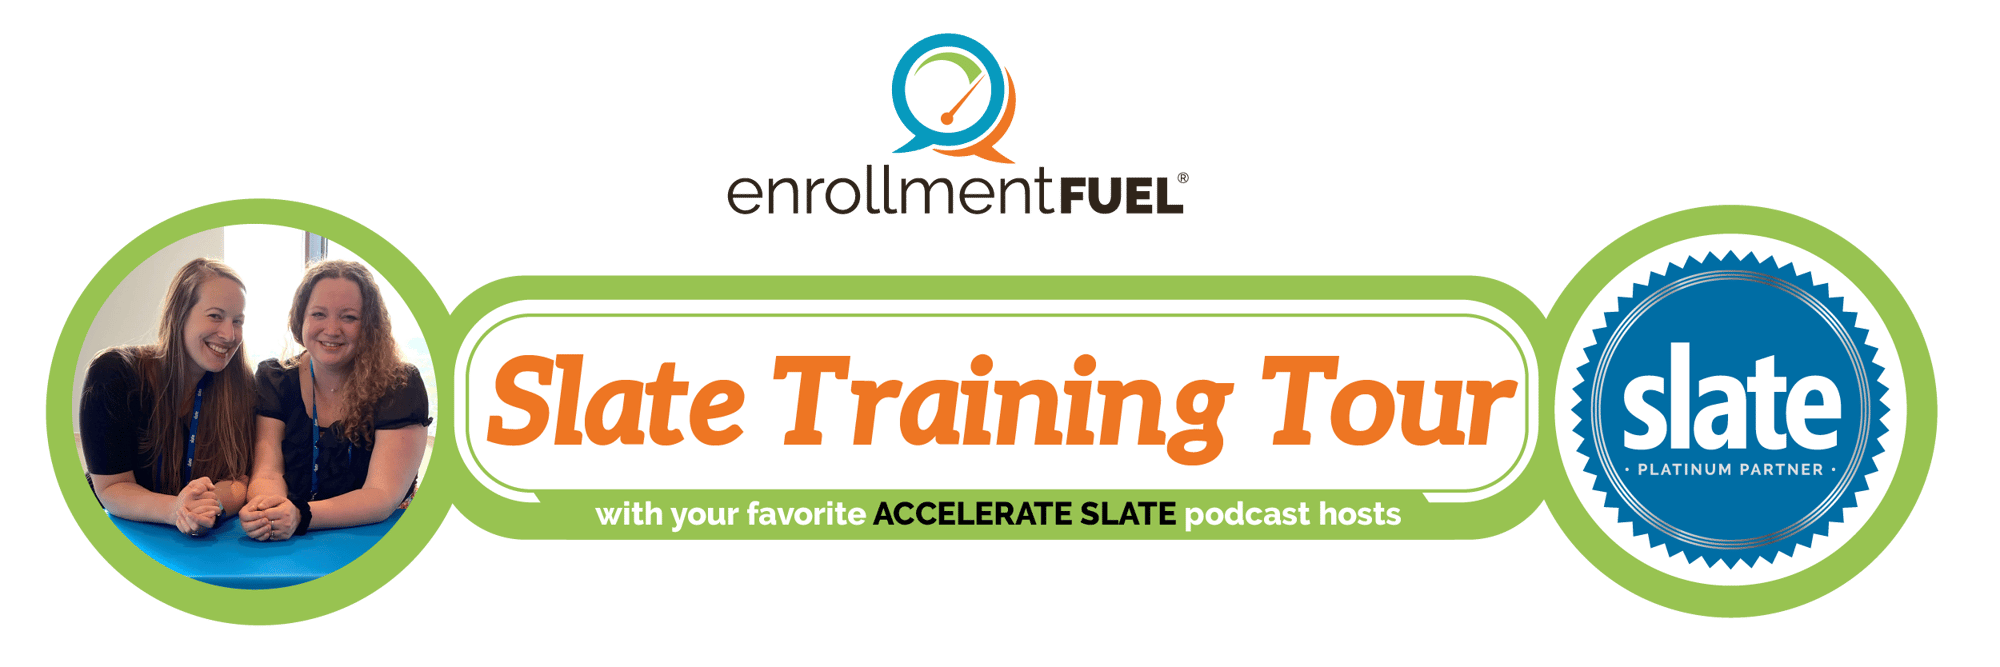 Slate Training Tour Mobile